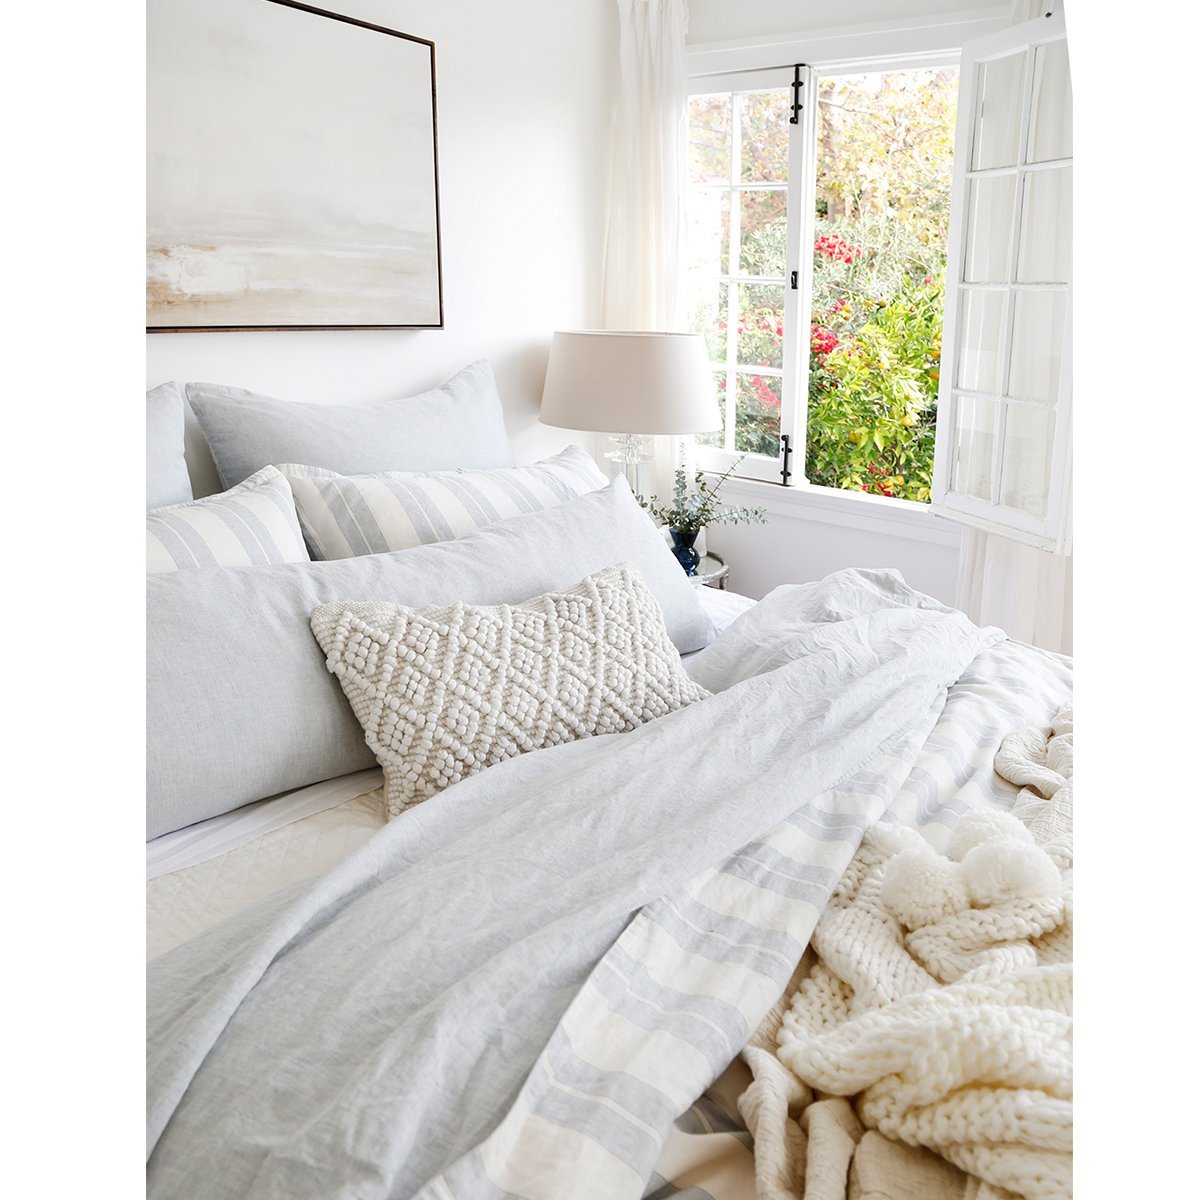 Pom Pom at Home Bedding and Pillows - Fig Linens 